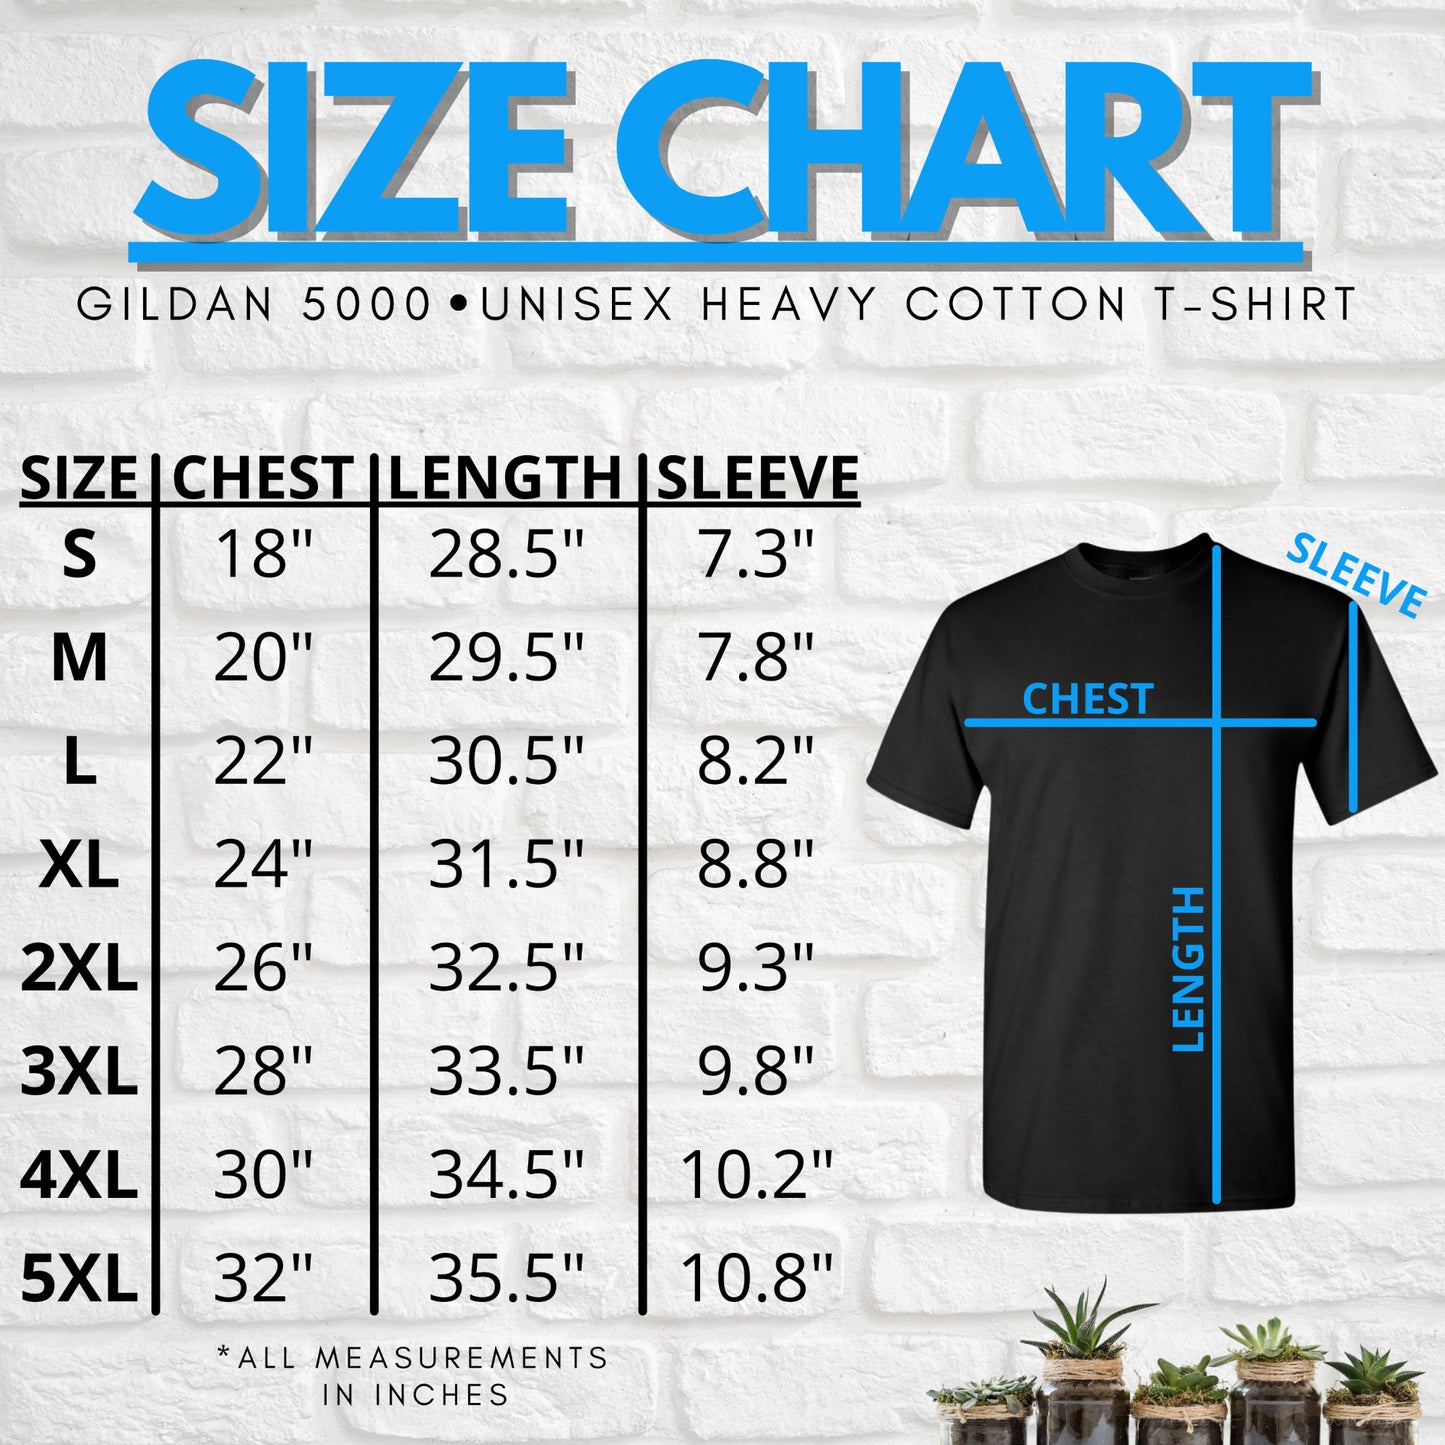 Gildan size chart